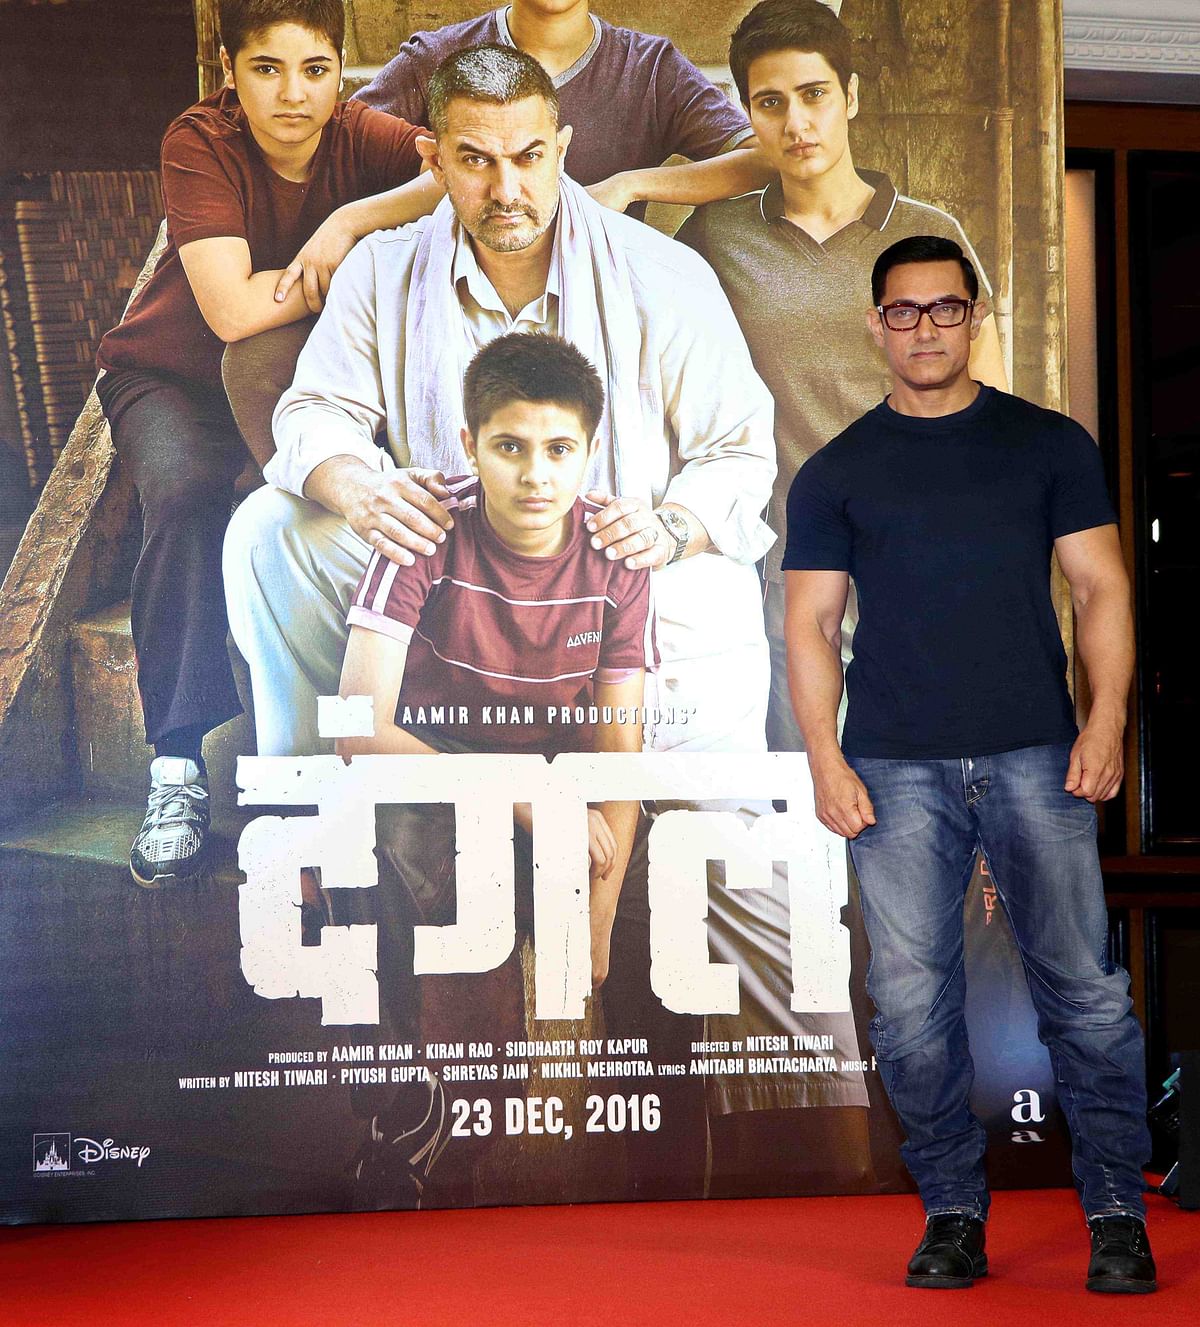 Salman Khan helped Aamir get the title ‘Dangal’ for his film 